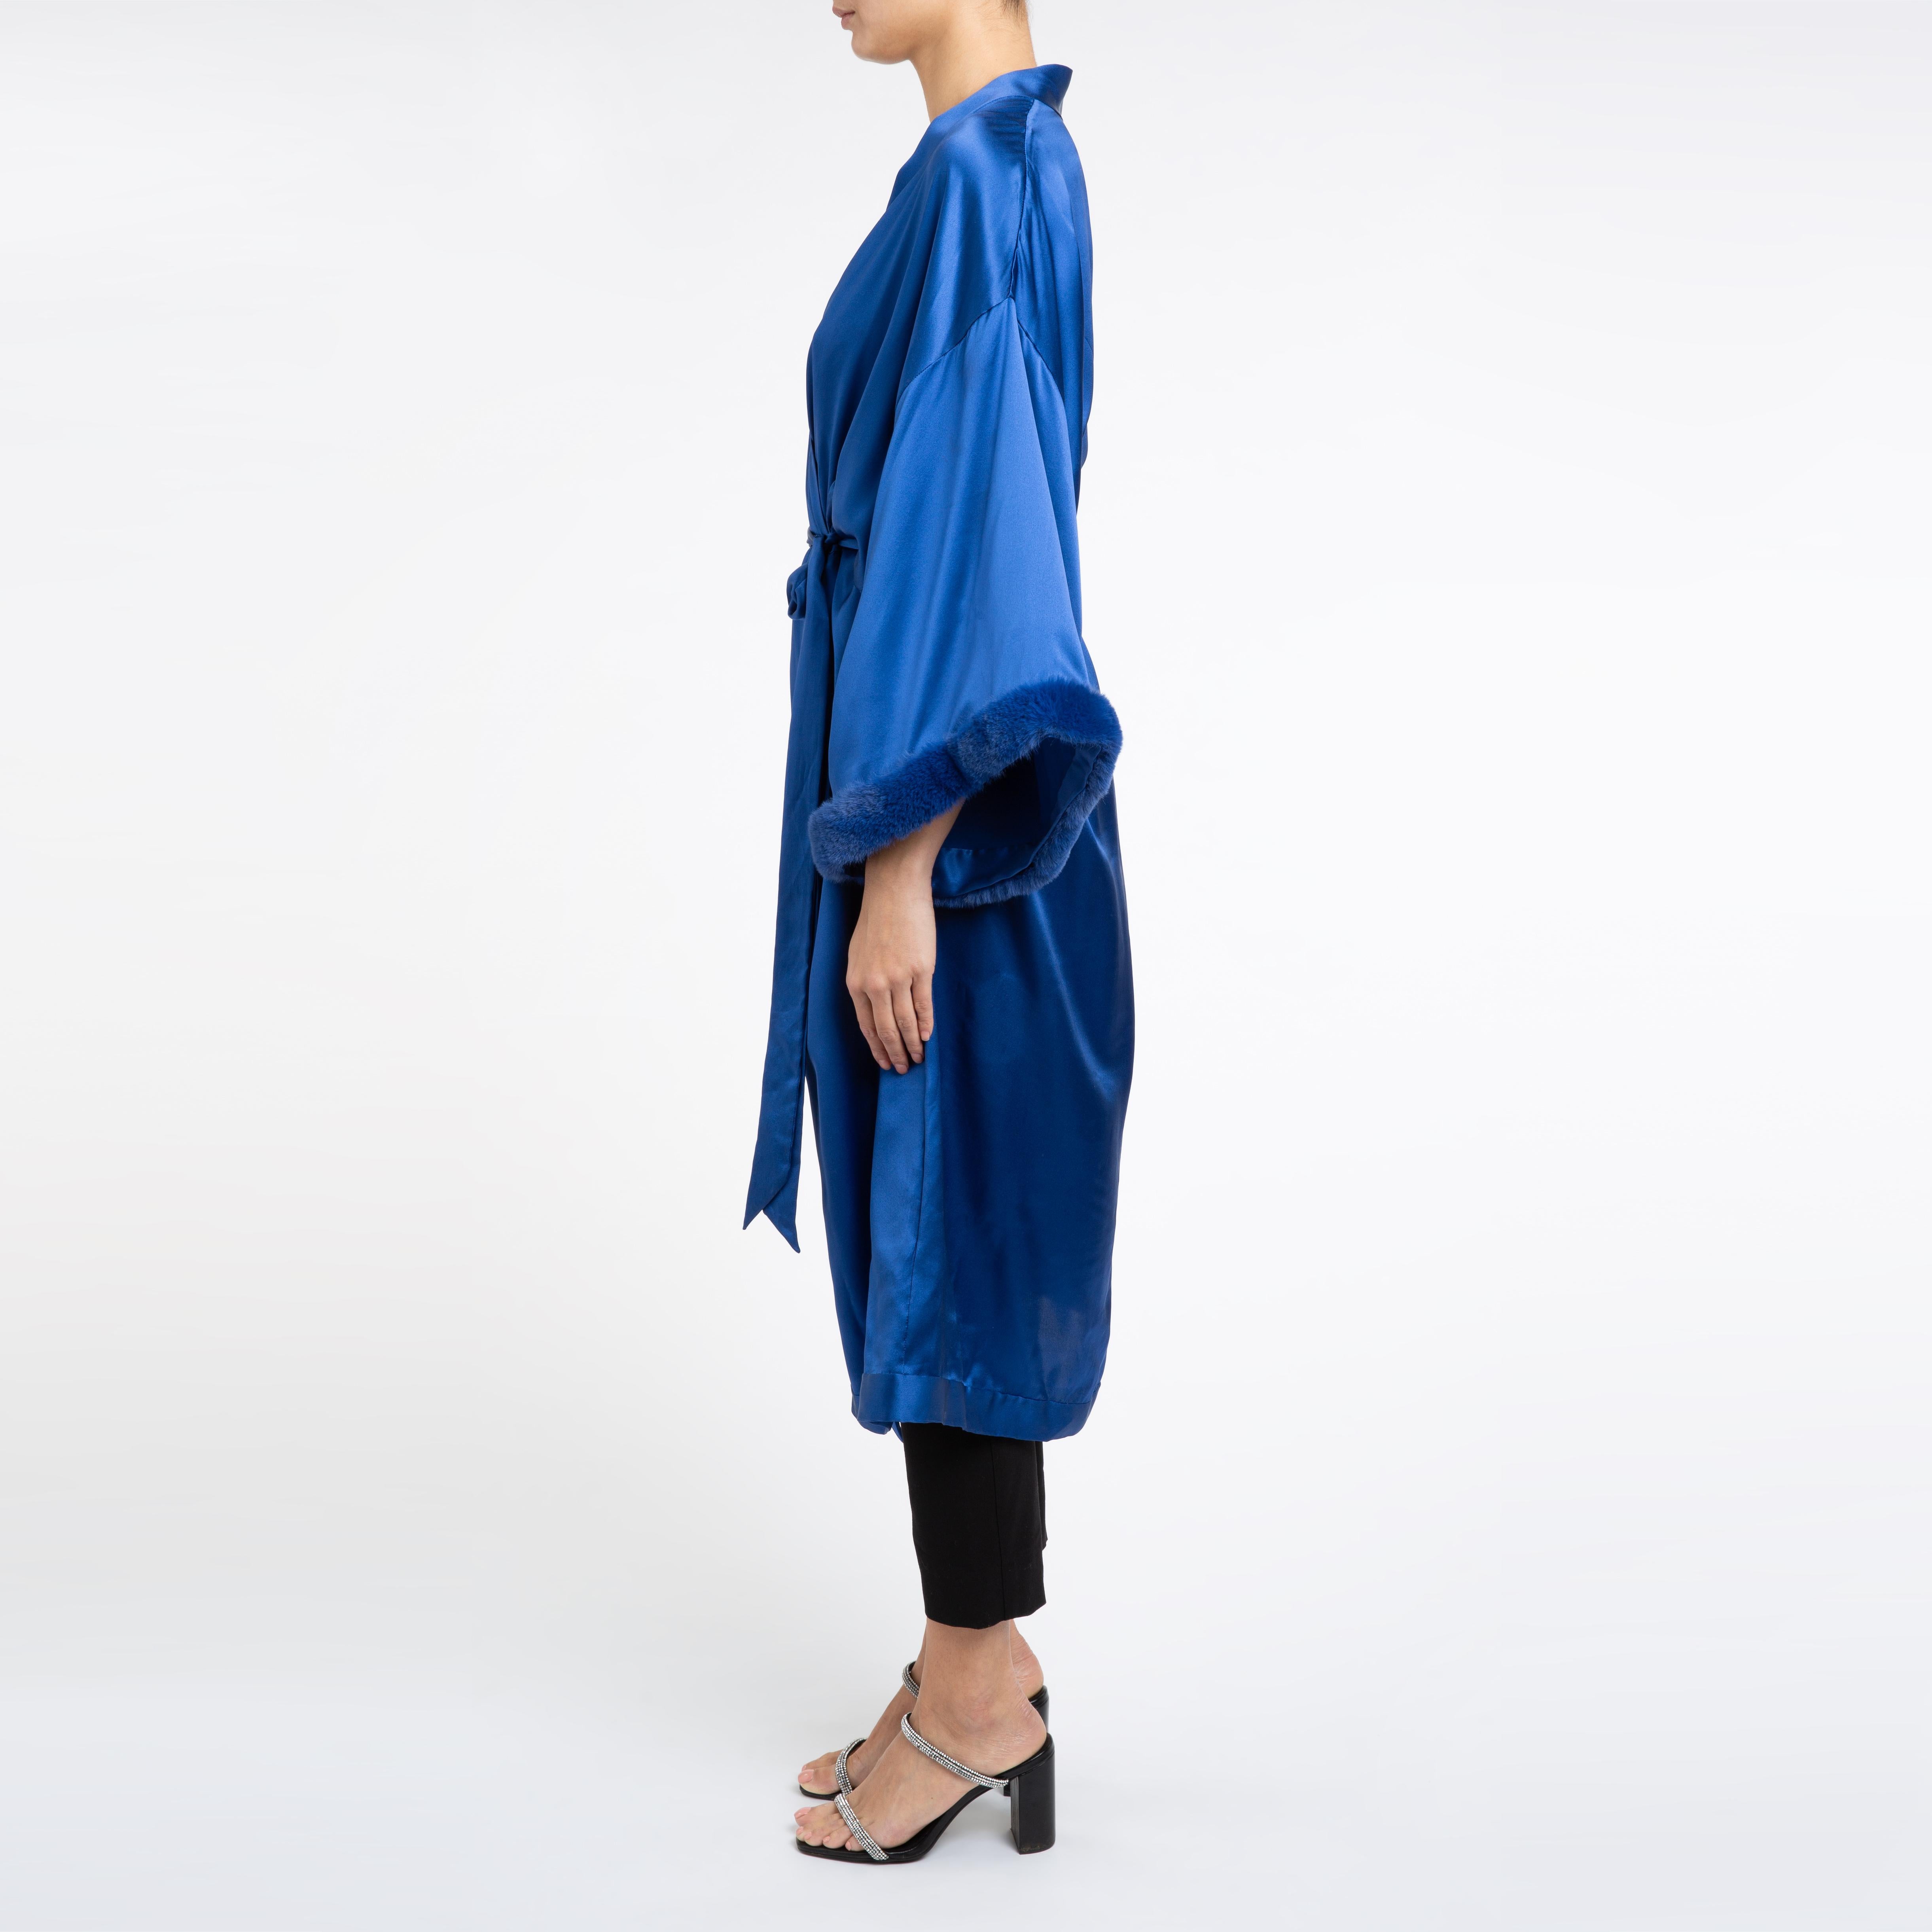 Women's Verheyen London Blue Kimono in Italian Silk Satin with Faux Fur - Small-medium  For Sale